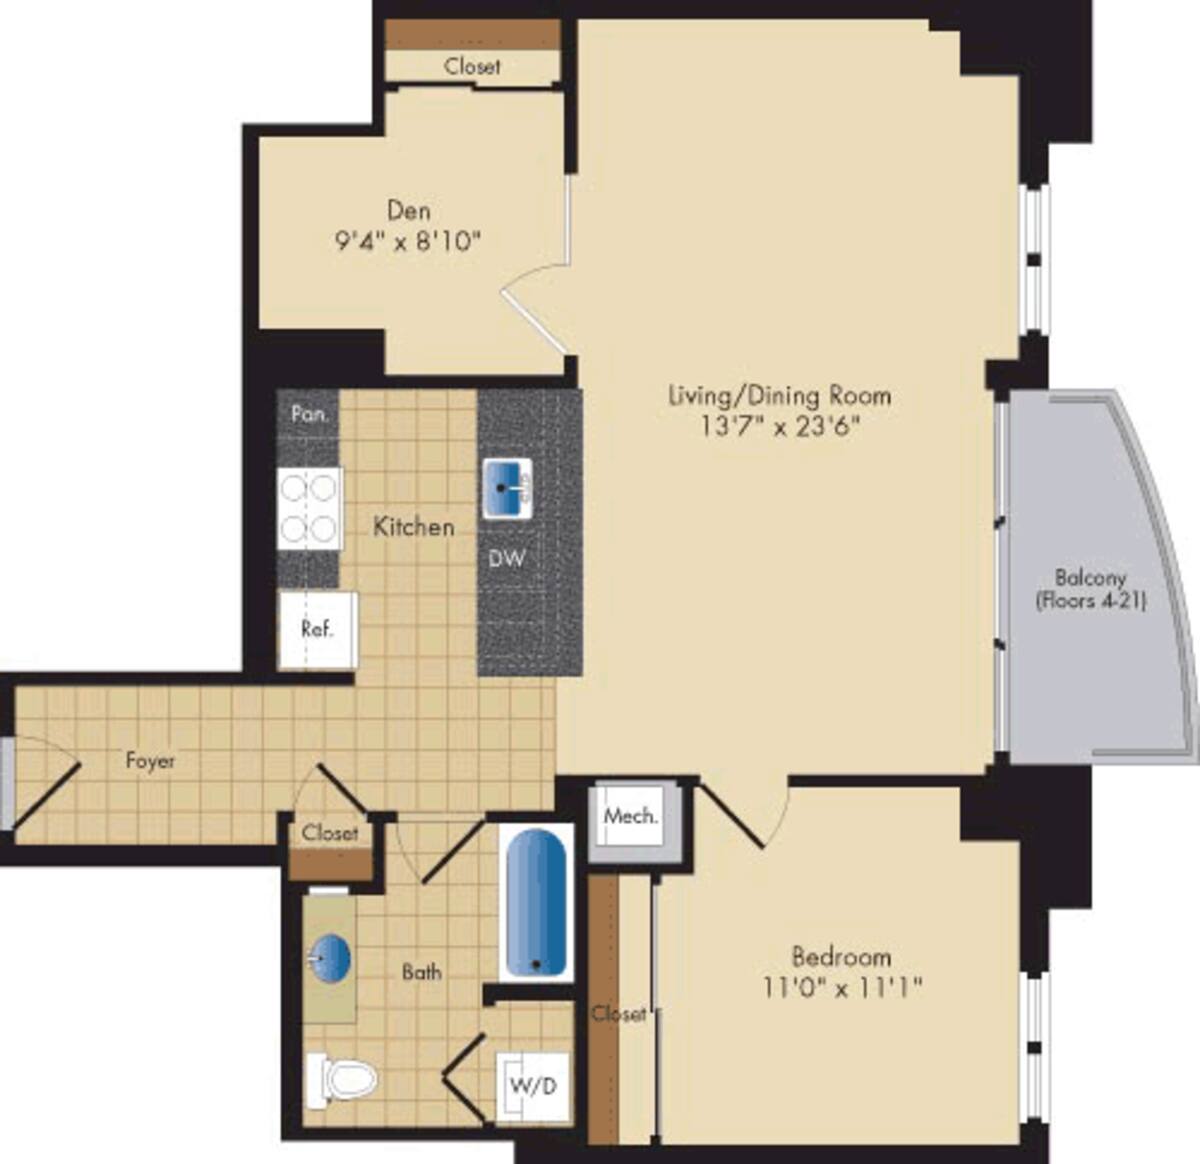 Floorplan diagram for Glebe, showing 1 bedroom